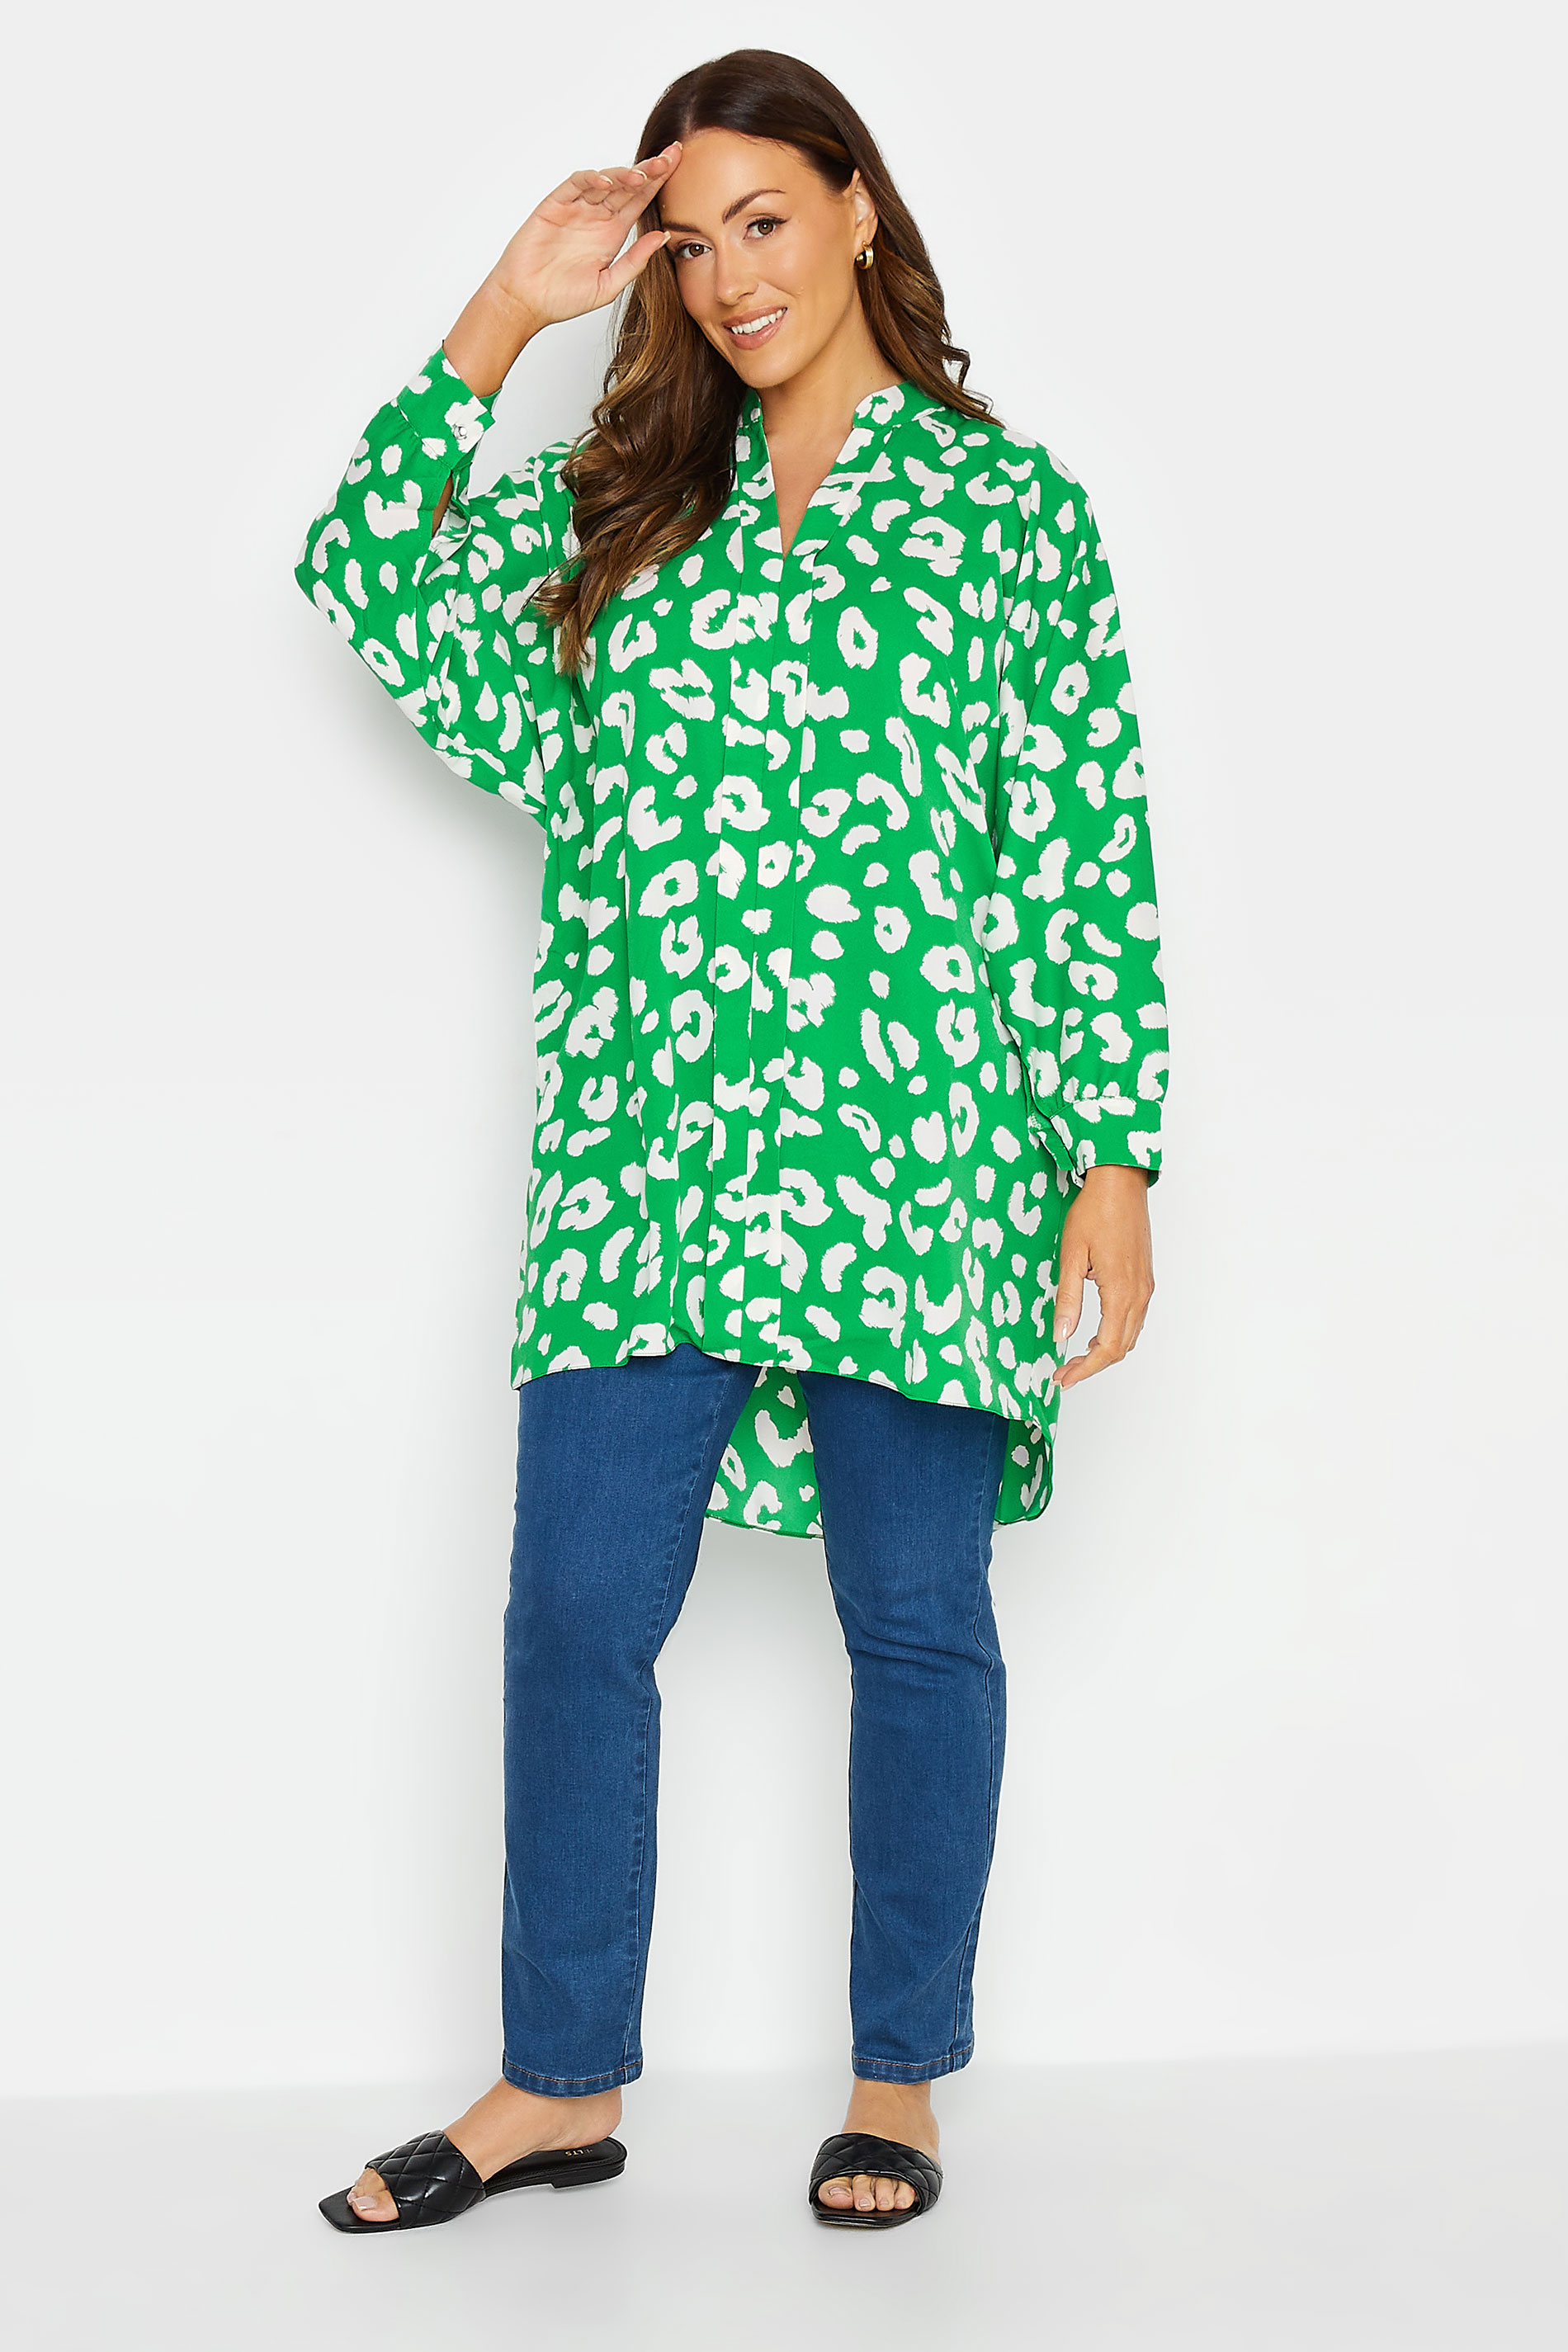 M&Co Green Leopard Print Blouse | M&Co